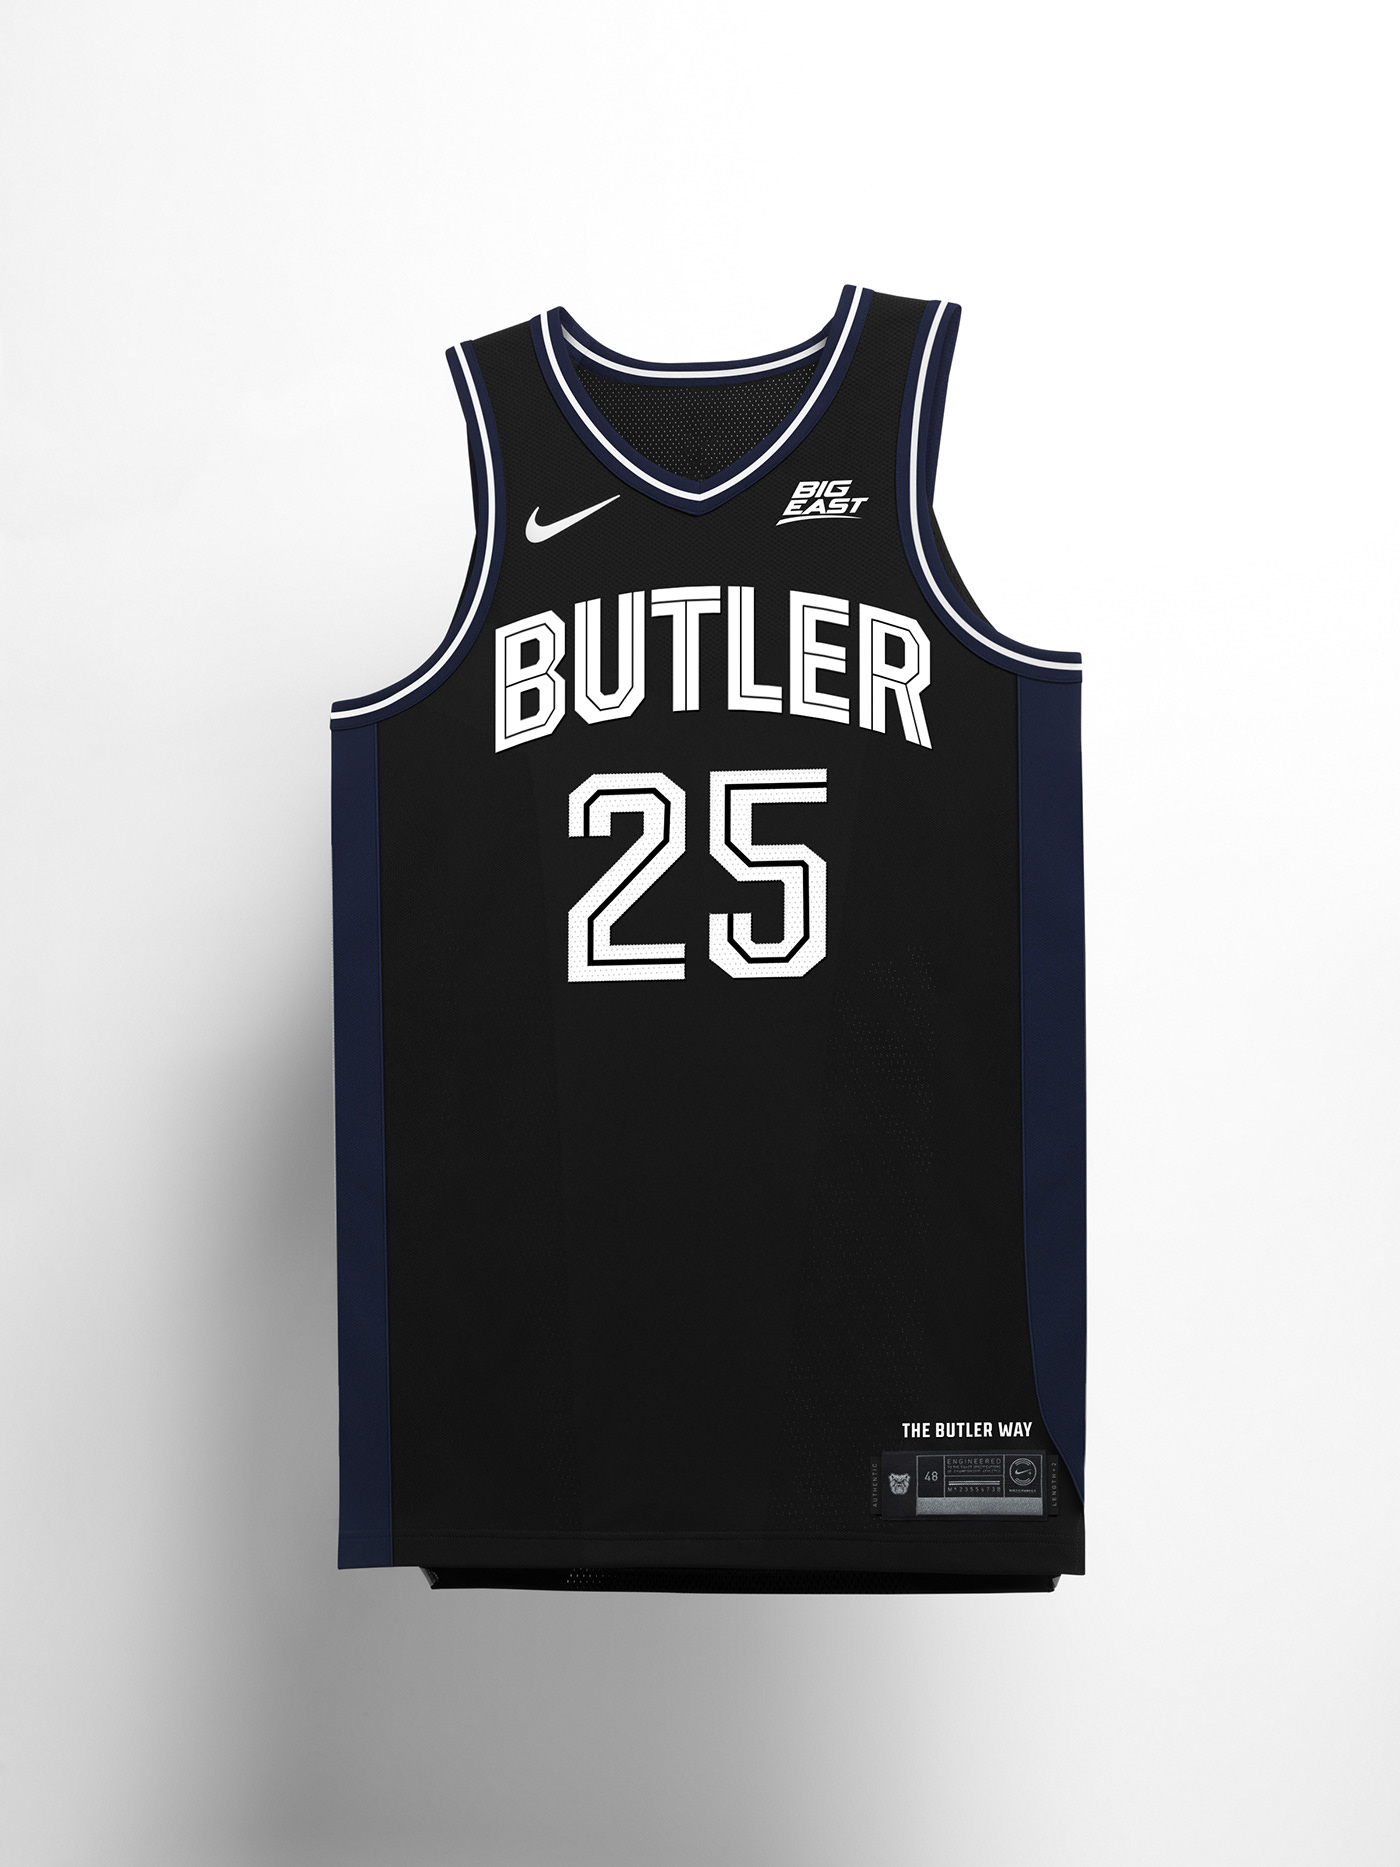 2019-20 Butler MBB Graphics on Behance